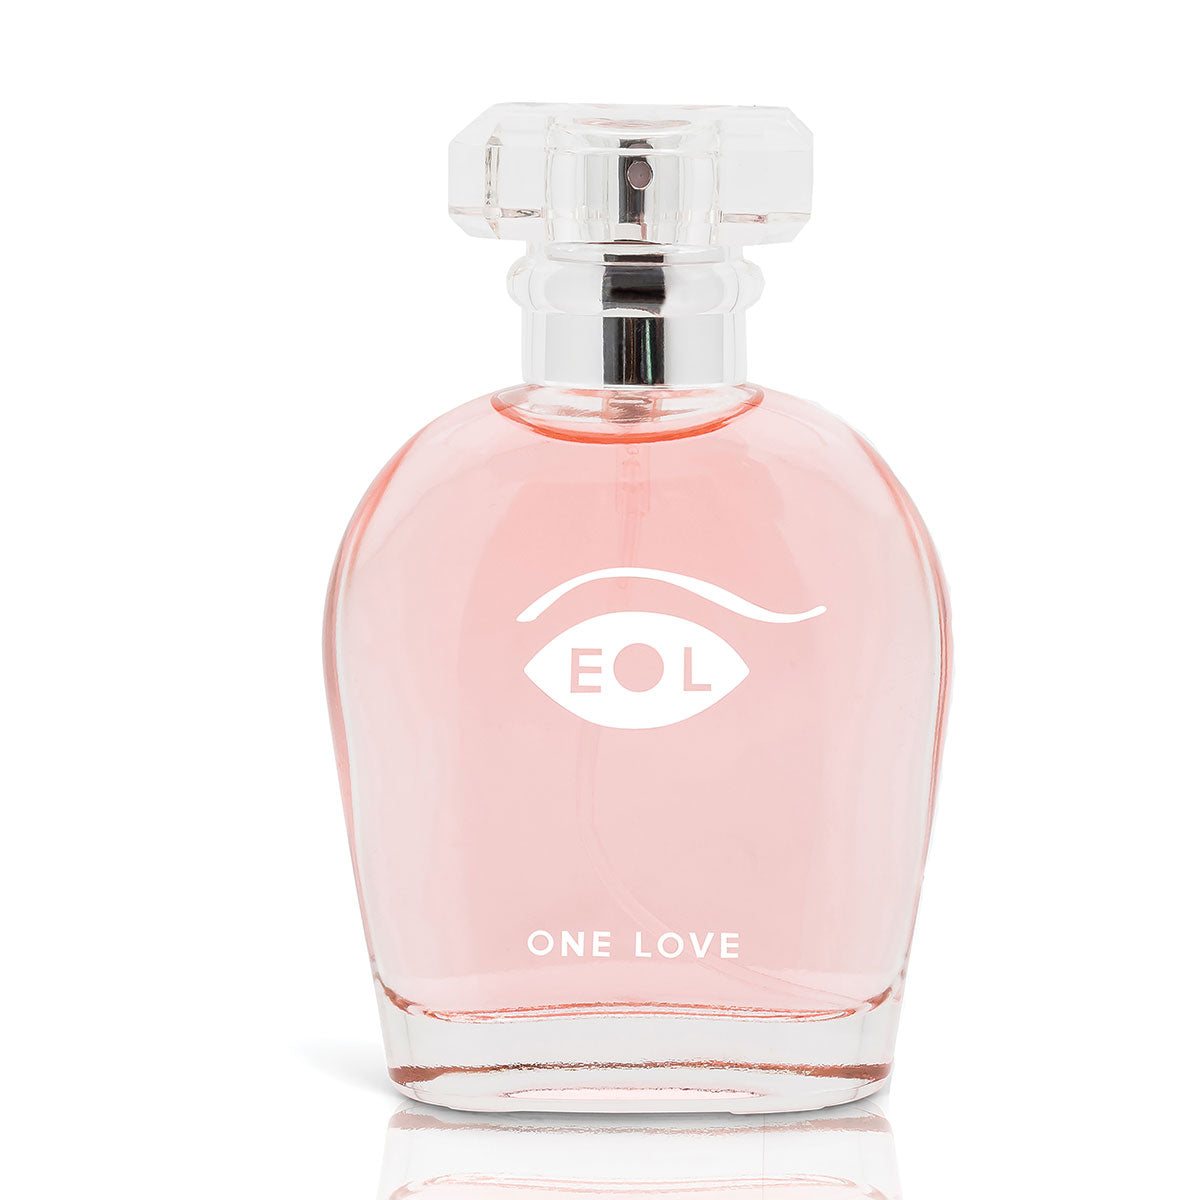 Eye of Love Pheromone Parfum 50ml - One Love (F to M)